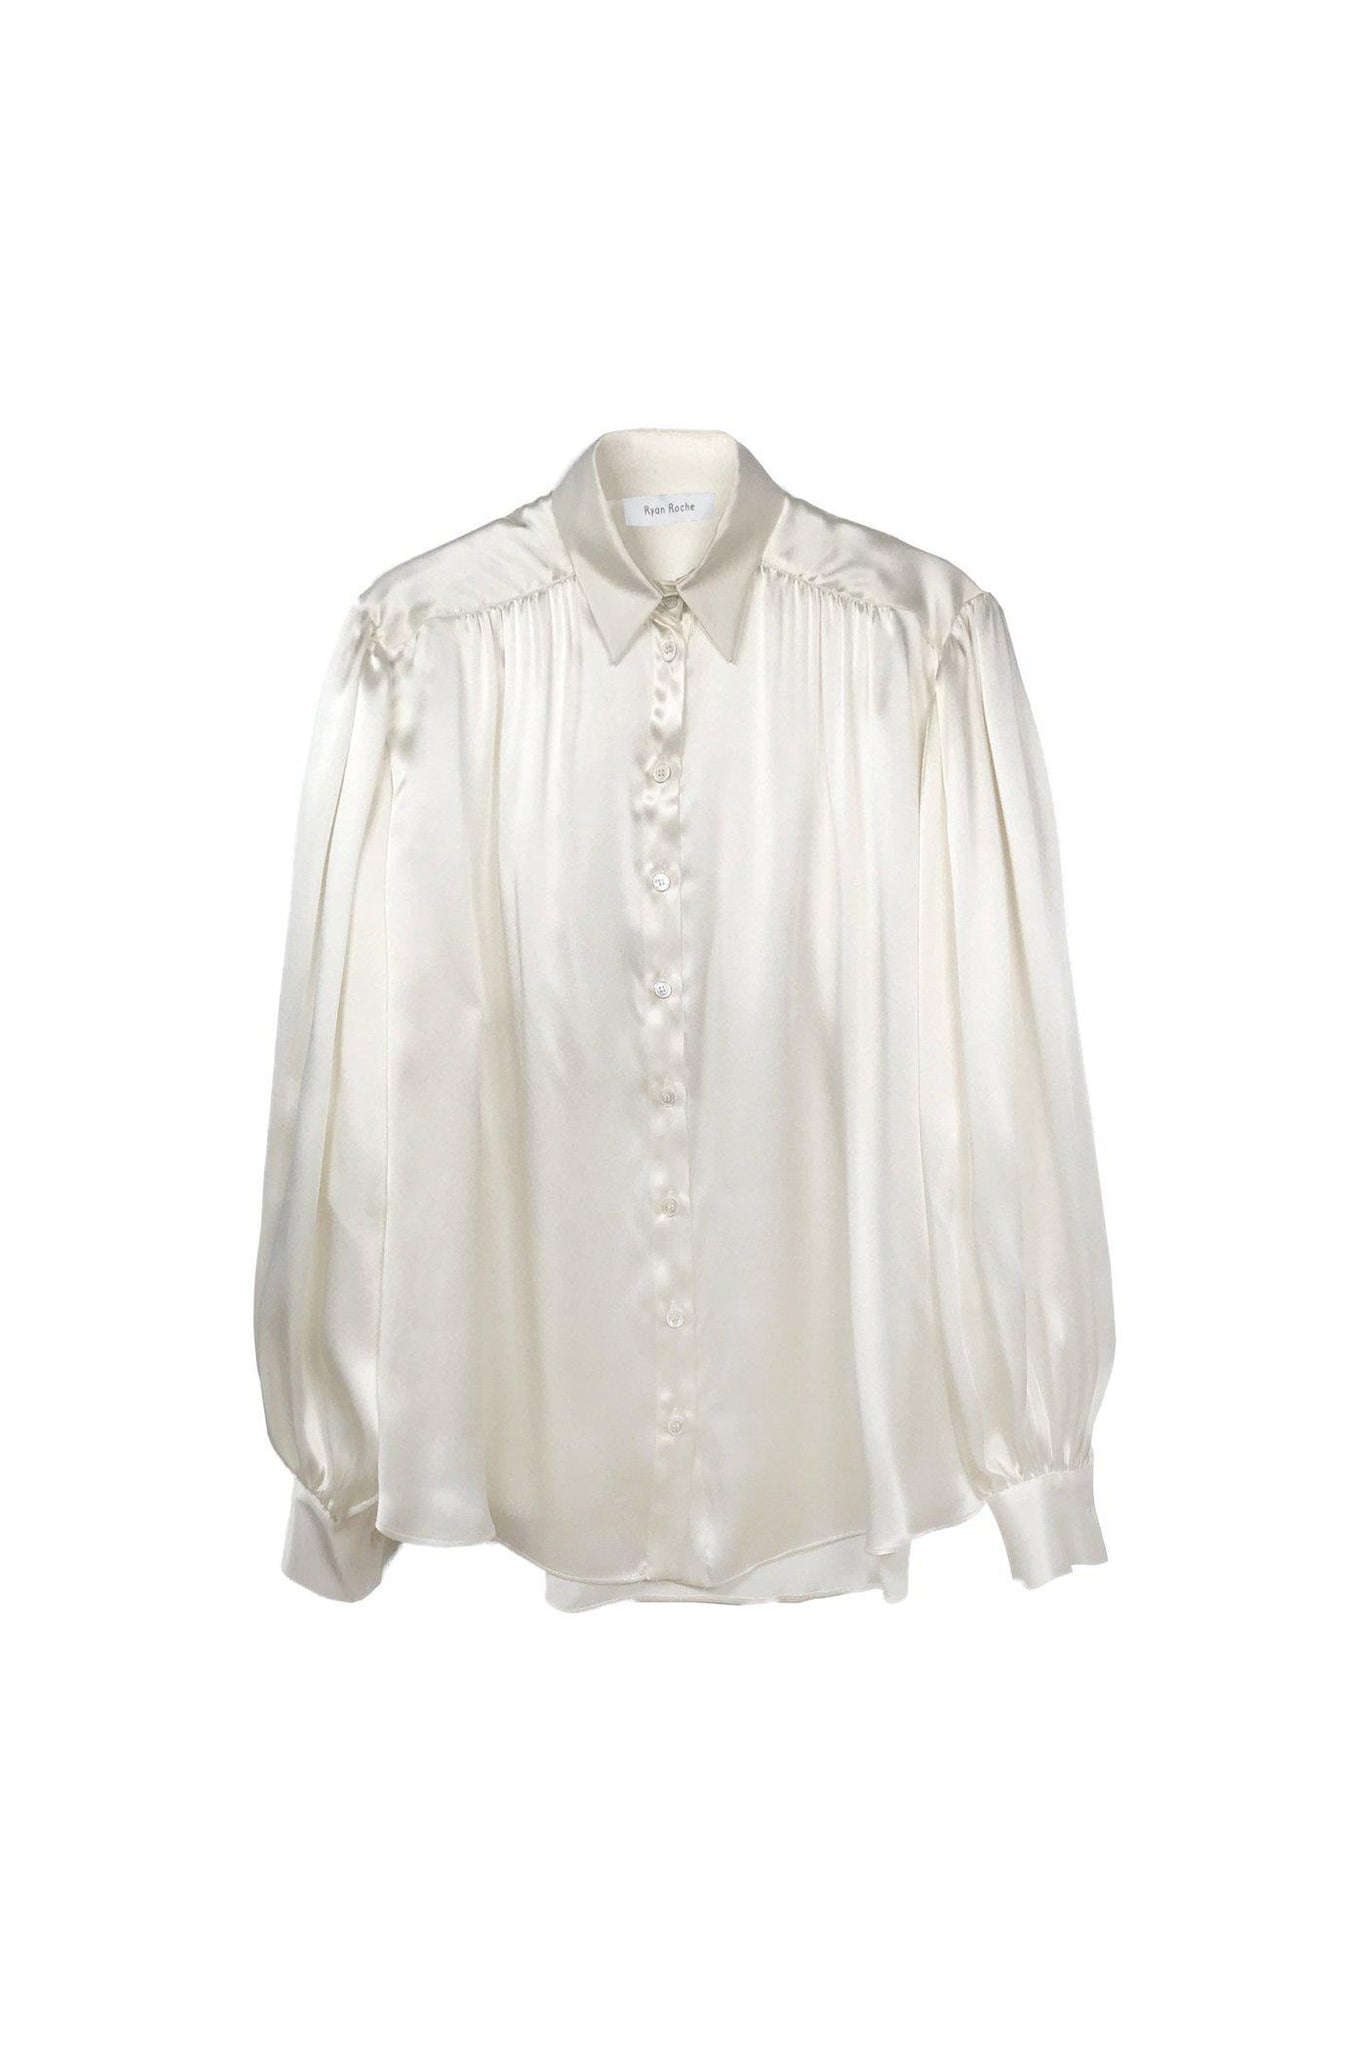 RYAN ROCHE Silk satin charmeuse puffed sleeve blouse in winter white